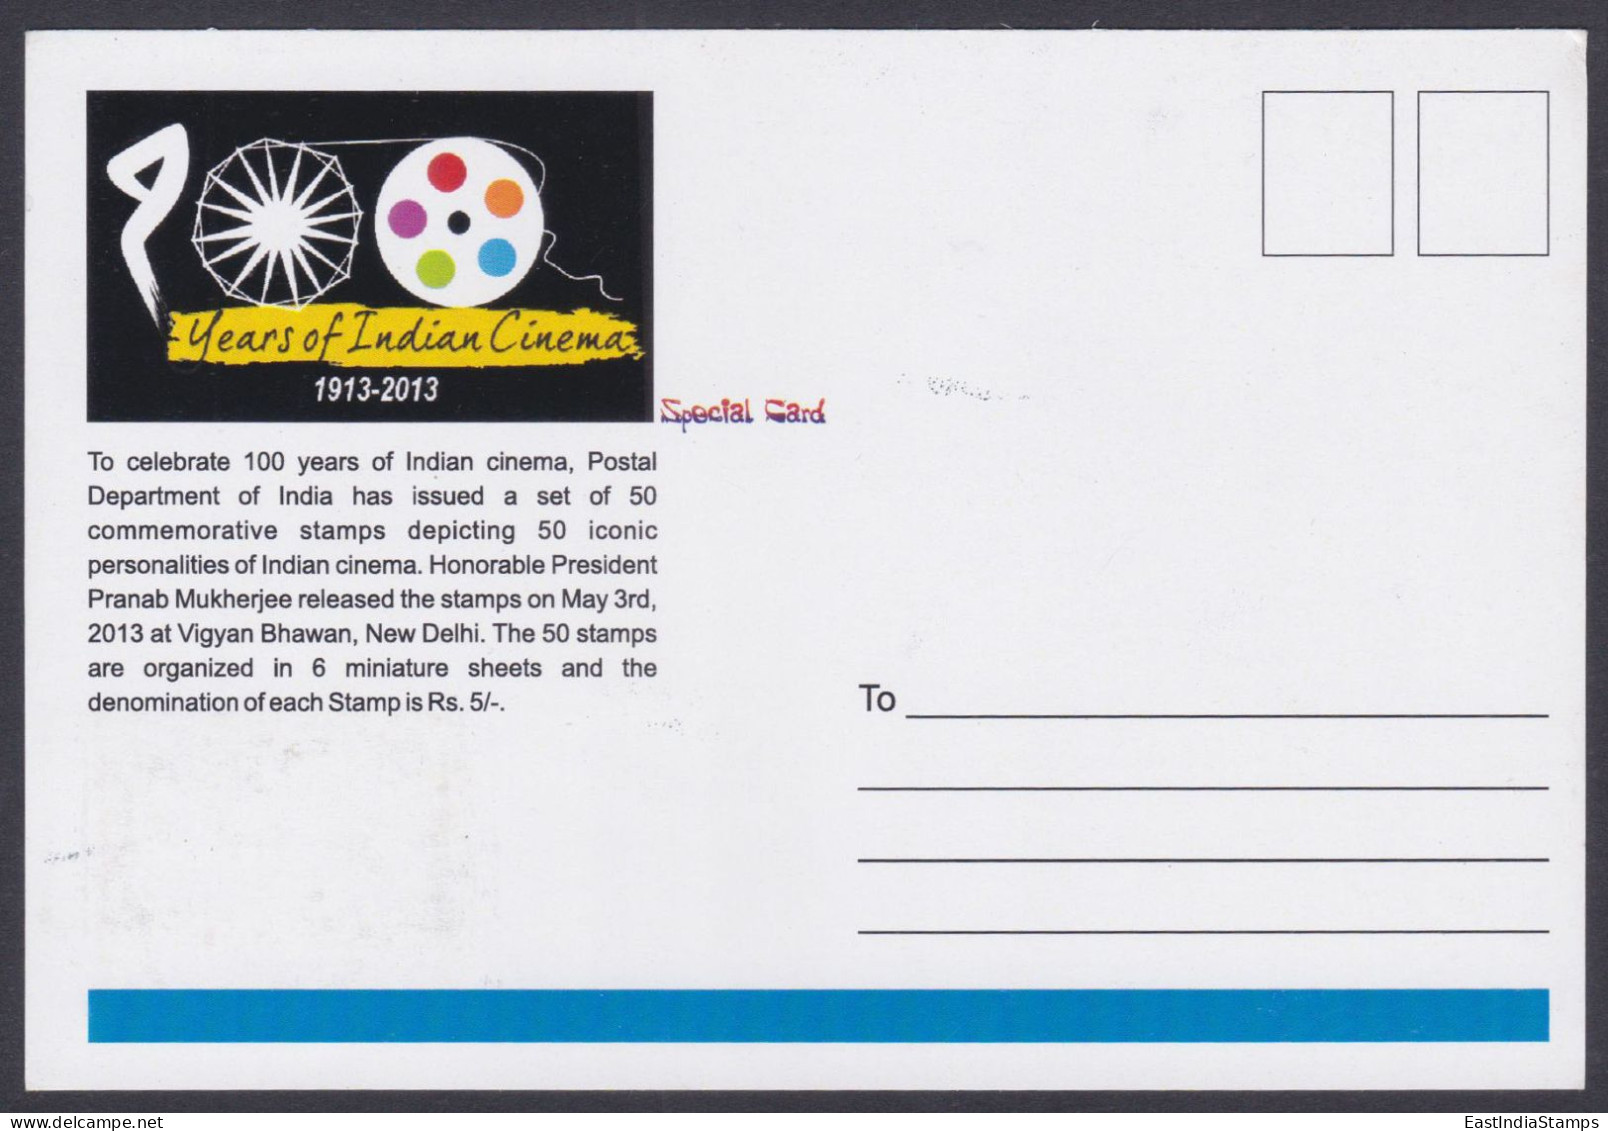 Inde India 2013 Maximum Max Card Pritviraj Kapoor, Indian Actor, Bollywood, Hindi Cinema, Film - Cartas & Documentos